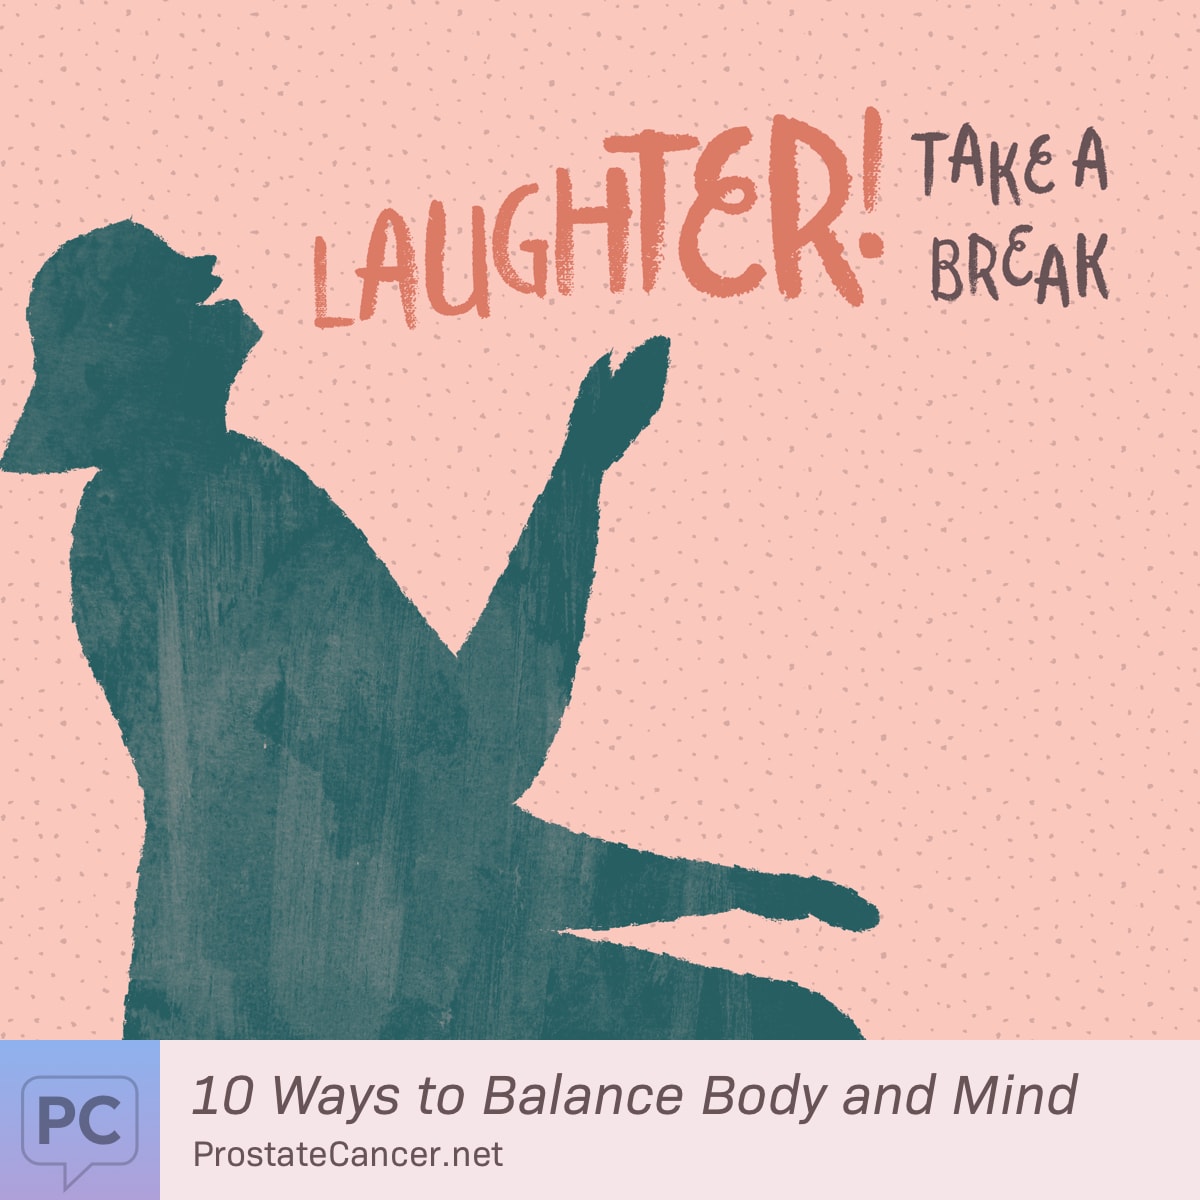 Laughter! Take a Break